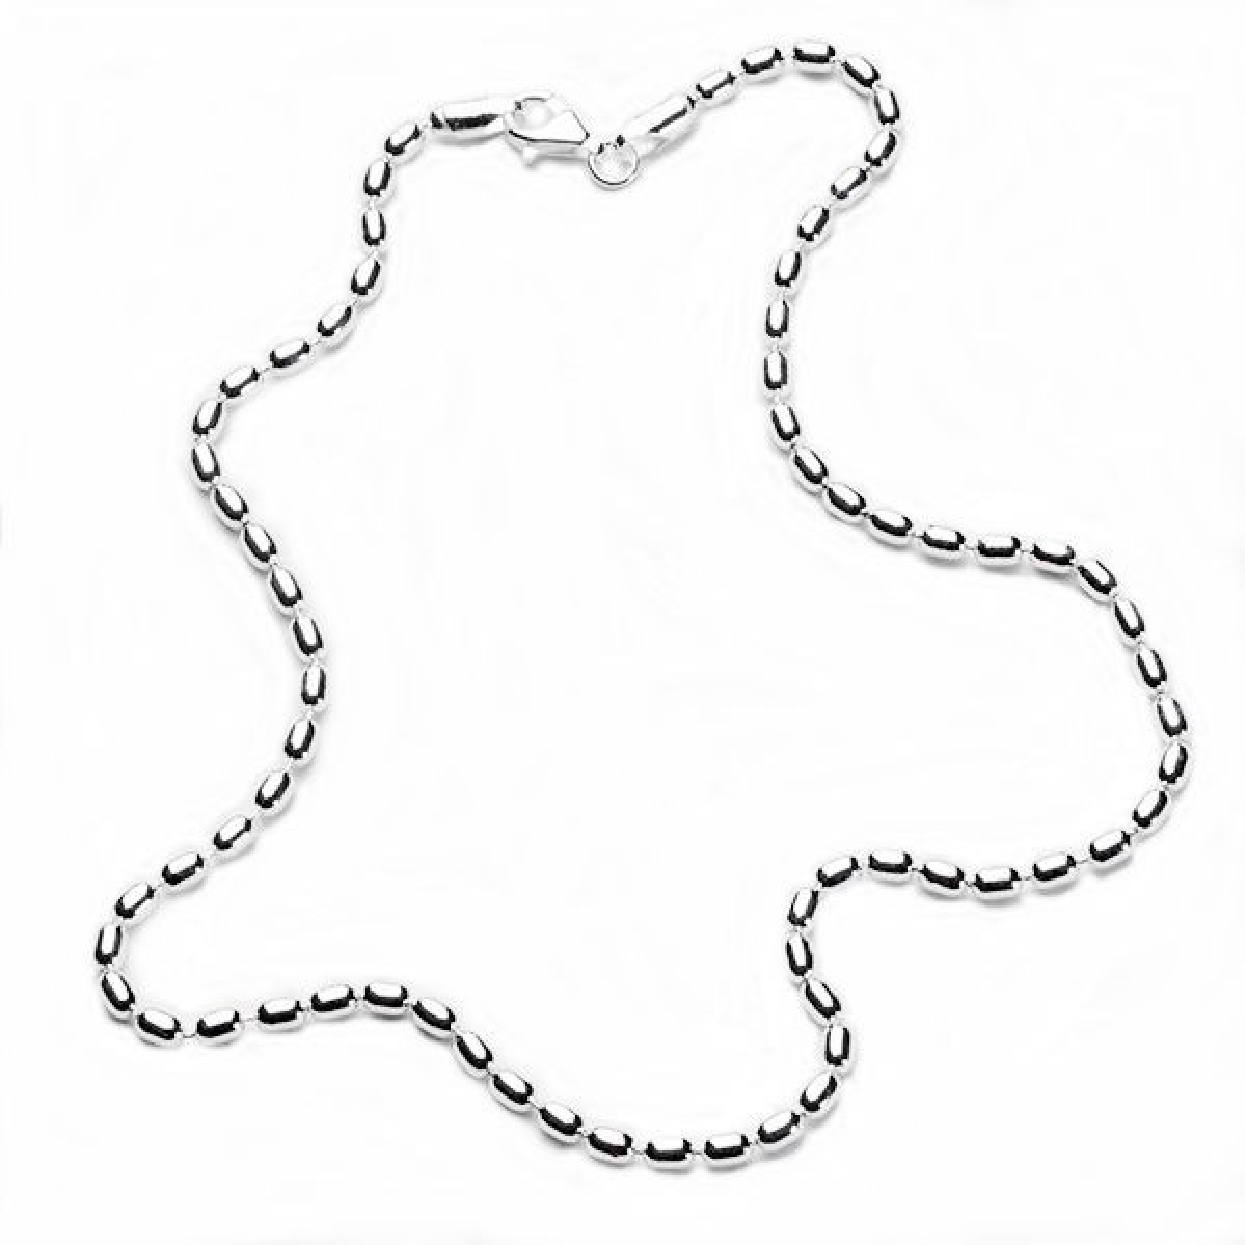 24 +2   Sterling silver rice bead 300 gauge necklace. 
KAR511/24+2.